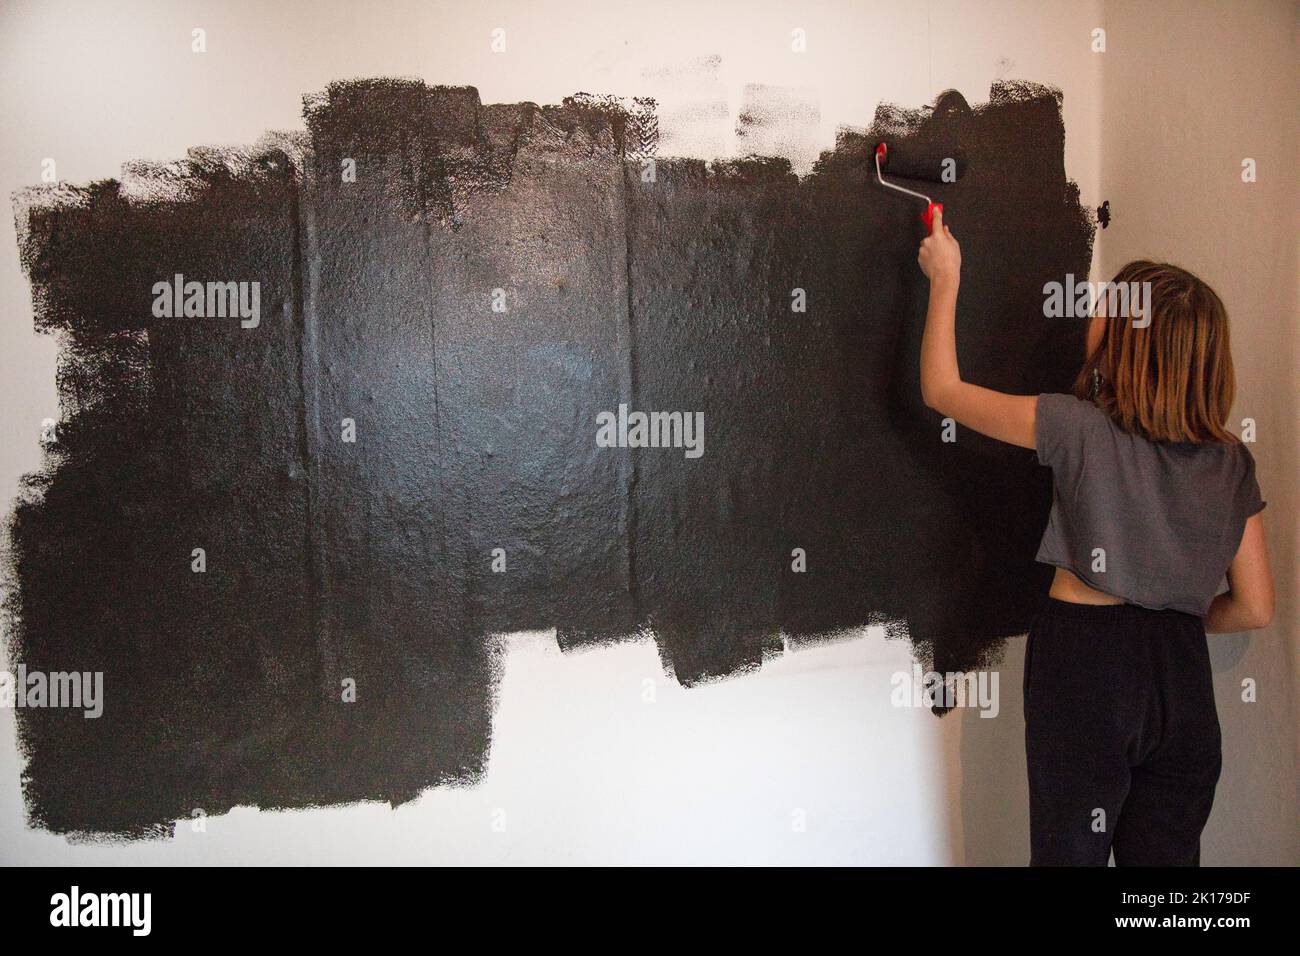 Woman painting wall black Stock Photo